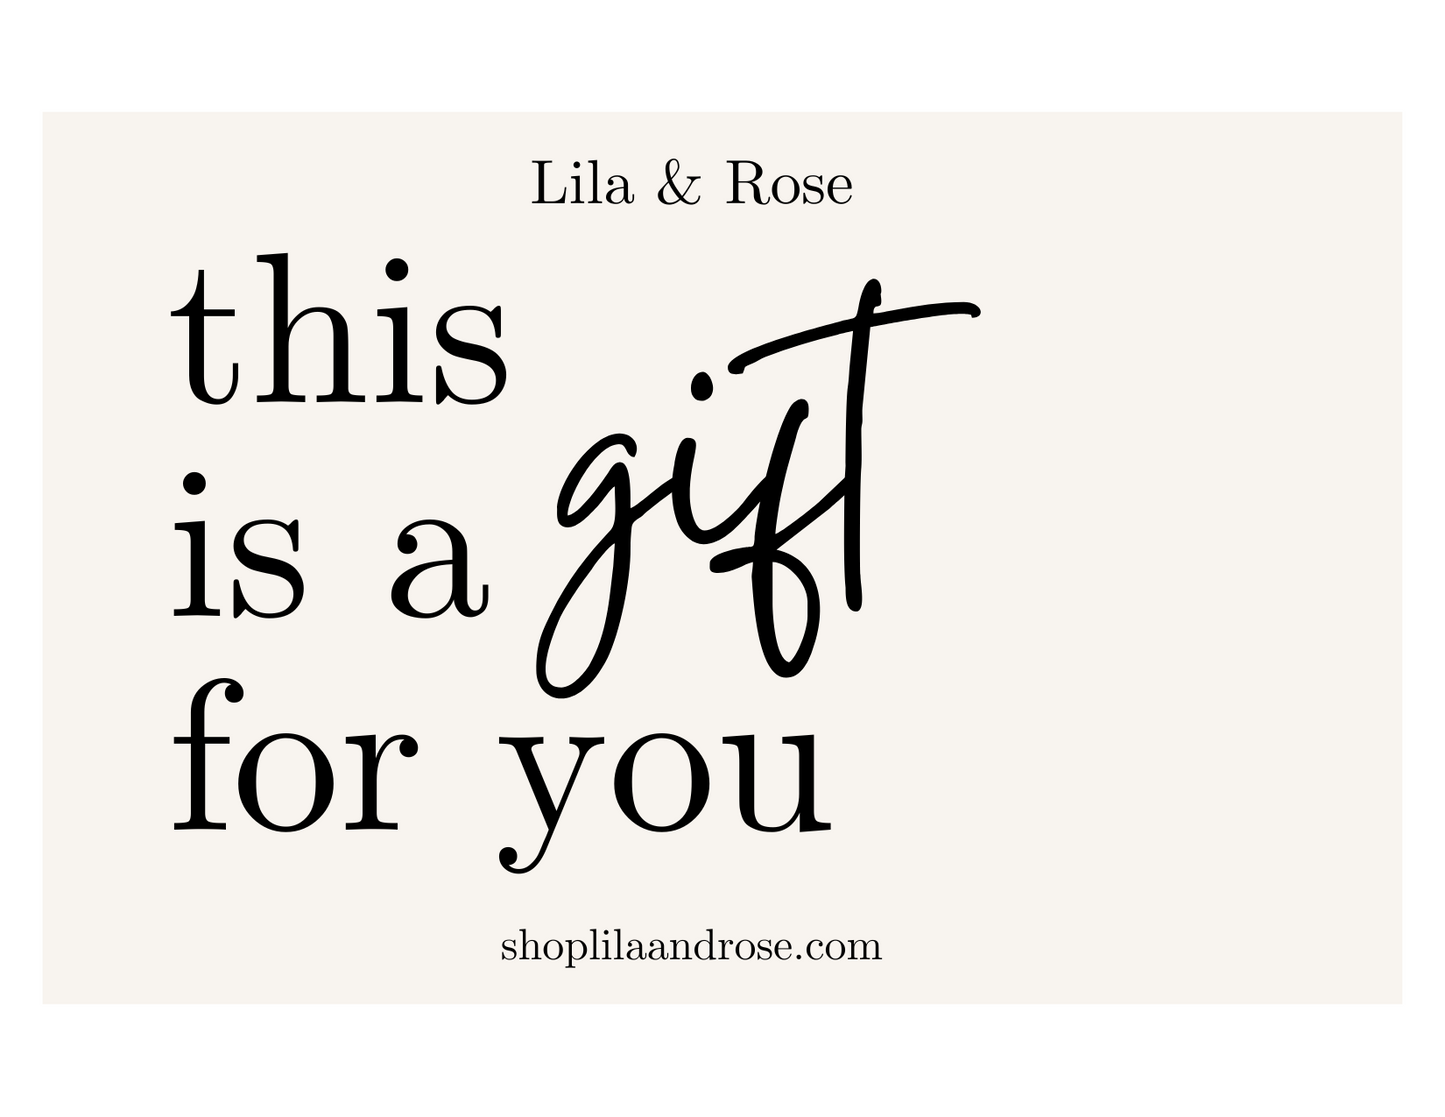 Lila & Rose Gift Card